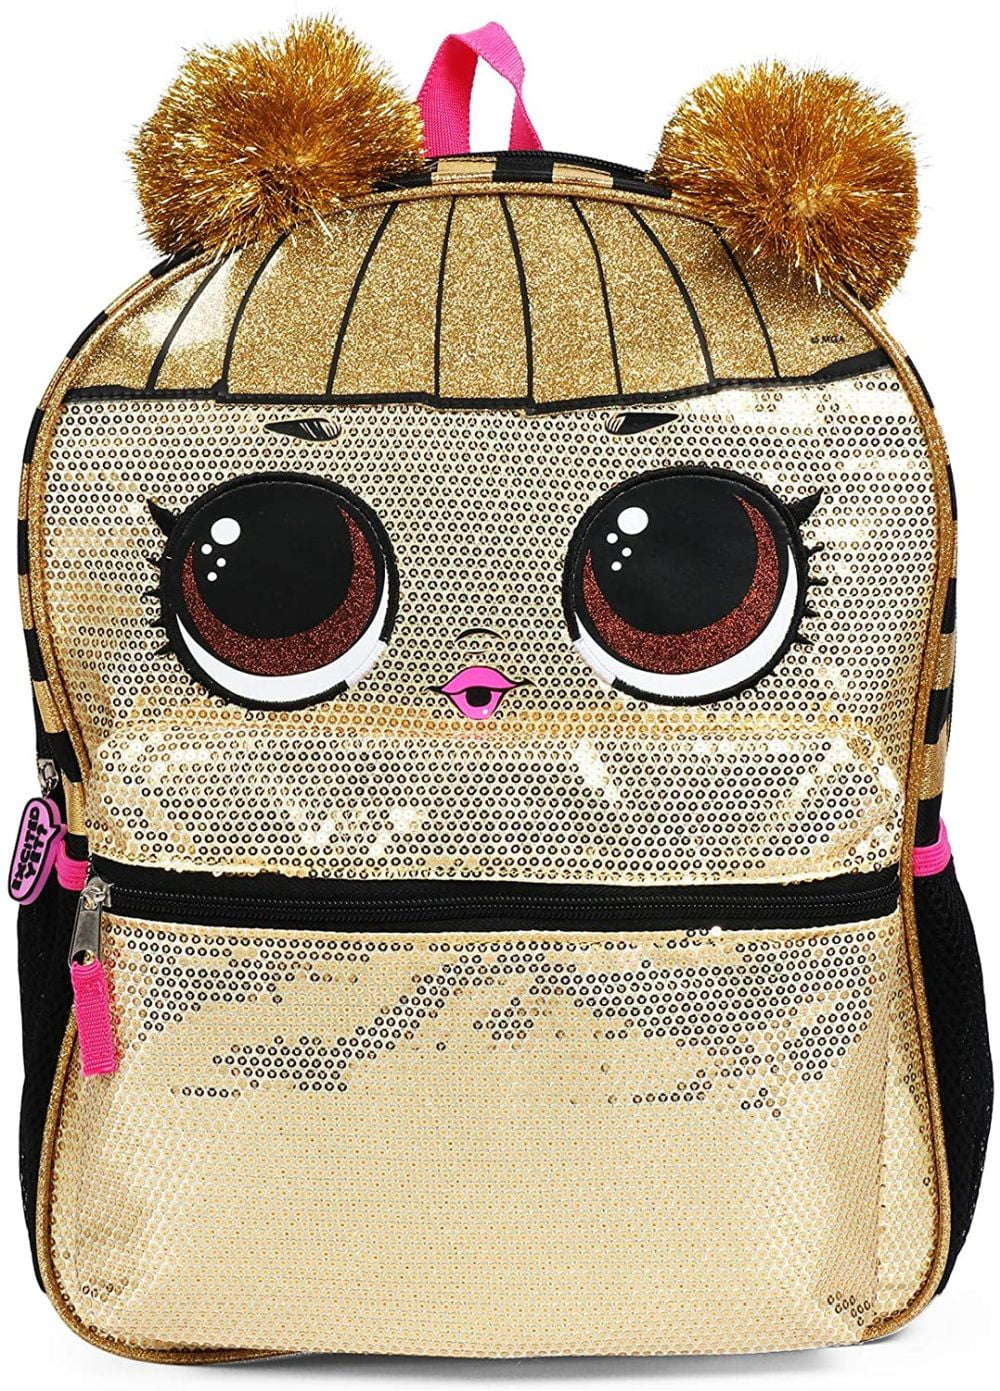 LOL Surprise Doll Girls Backpack Queen Bee Sequin Bookbag 16 inch fe5a8cd2 89cf 47b5 bc55 b1de87a59f59.8a92e21e7e15db887ebdf89446e4da96